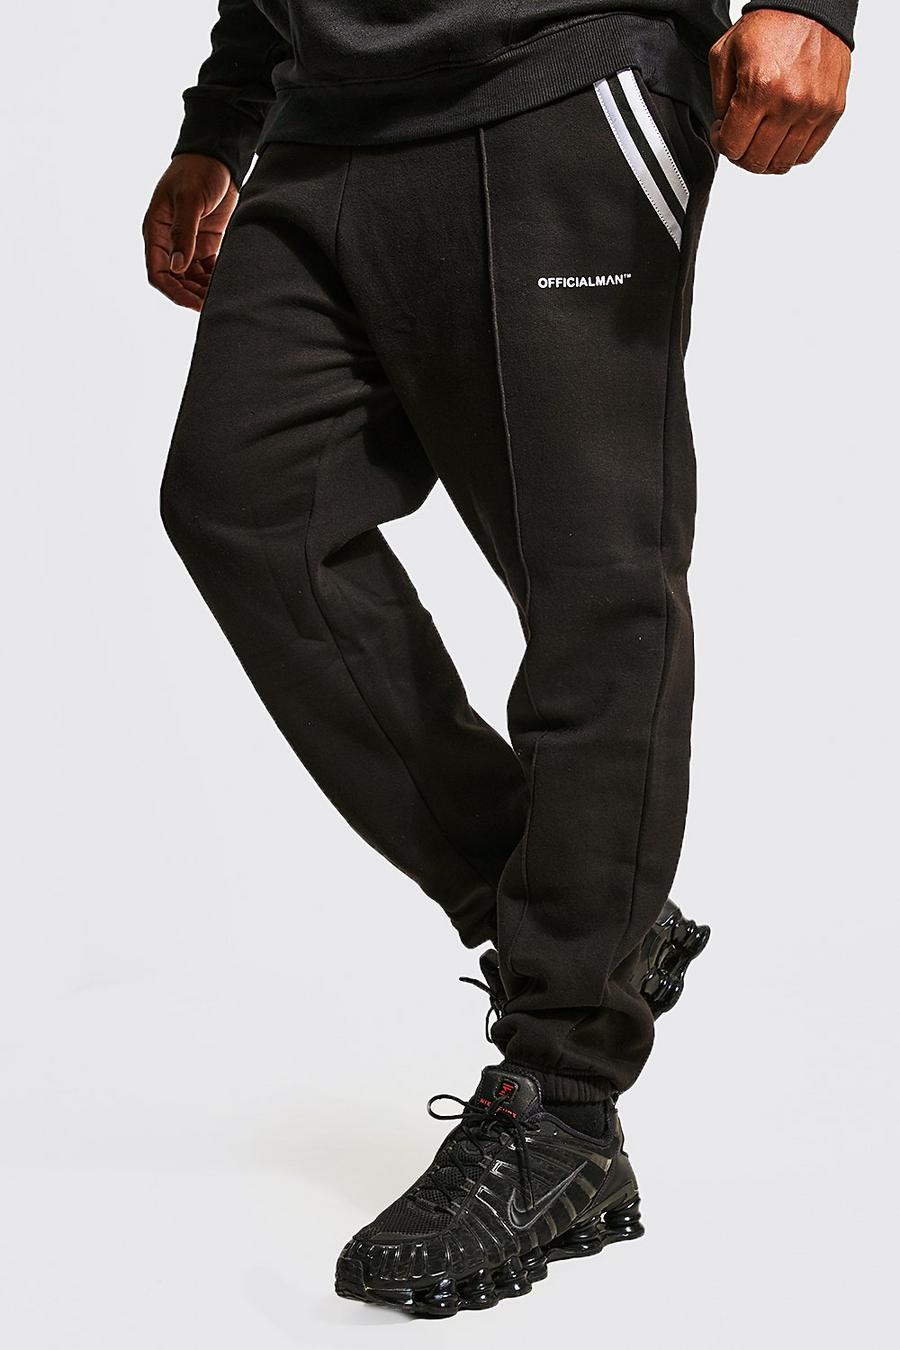 Pantaloni tuta Plus Size Slim Fit con nervature, strisce e tasche, Black negro image number 1